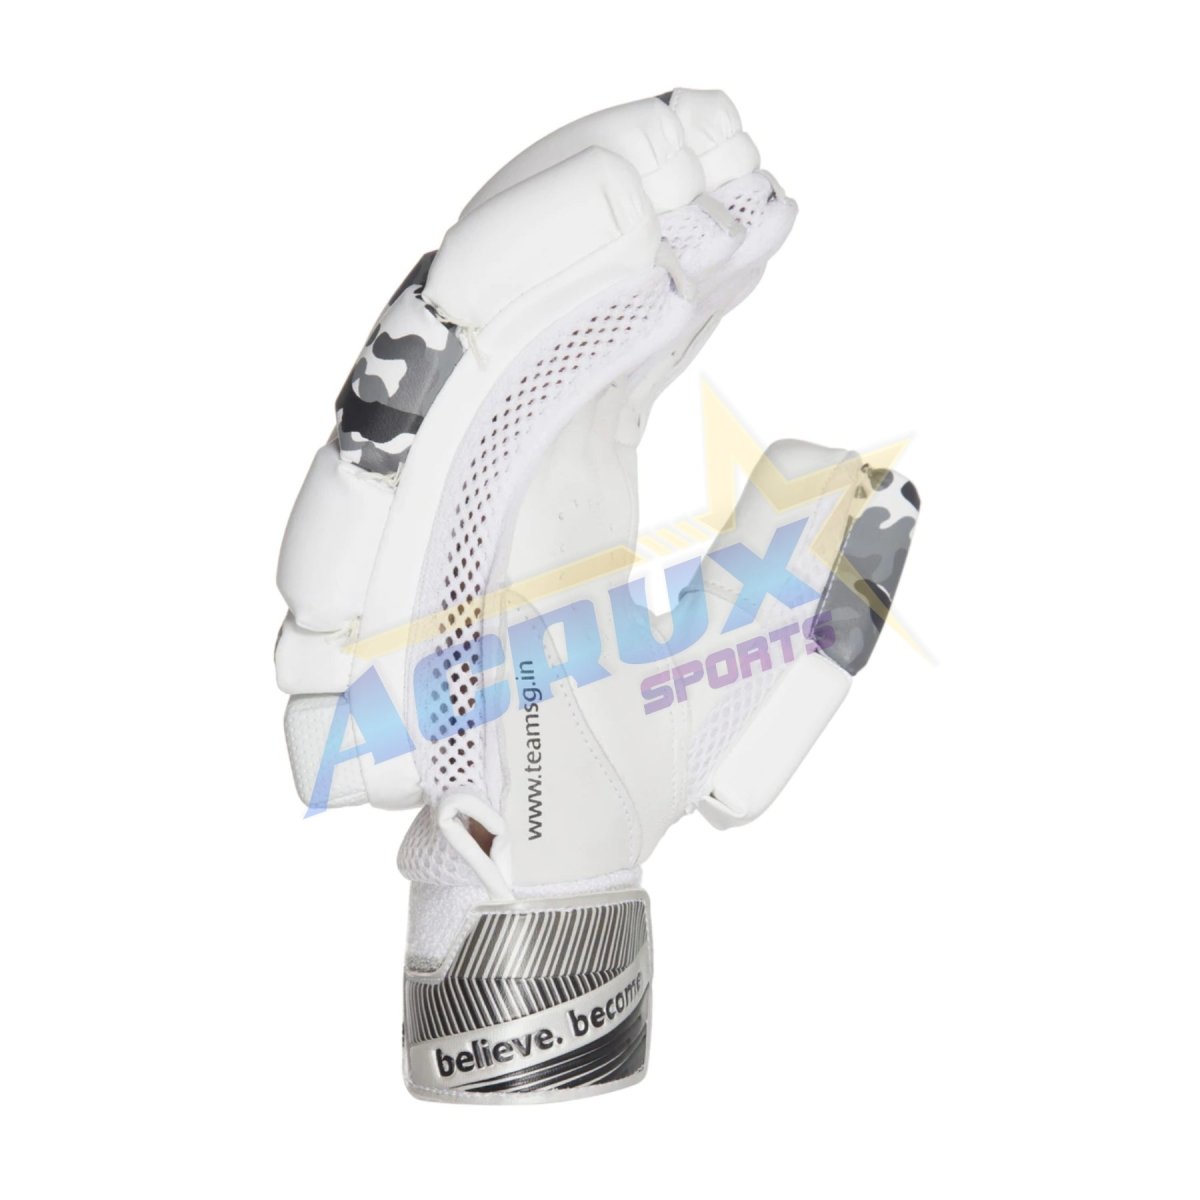 SG KLR Lite Cricket Batting Gloves - Acrux Sports